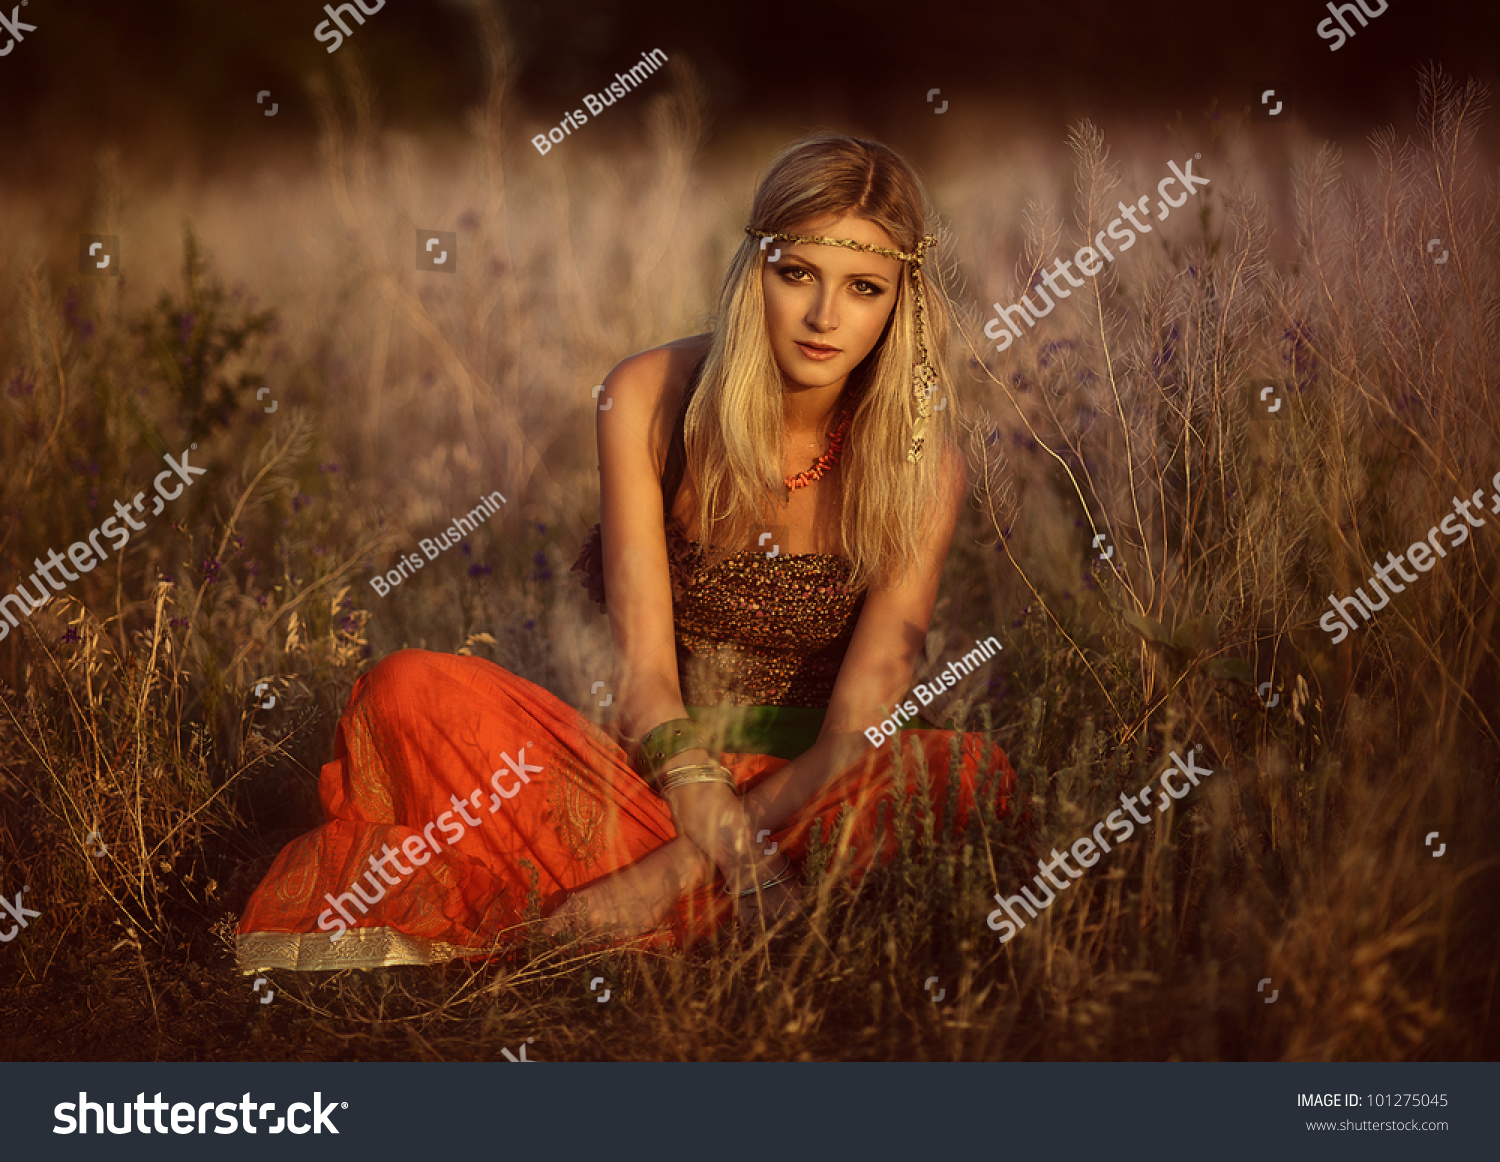 Beautiful Girl Of Hippie In The Field Stock Photo 101275045 : Shutterstock